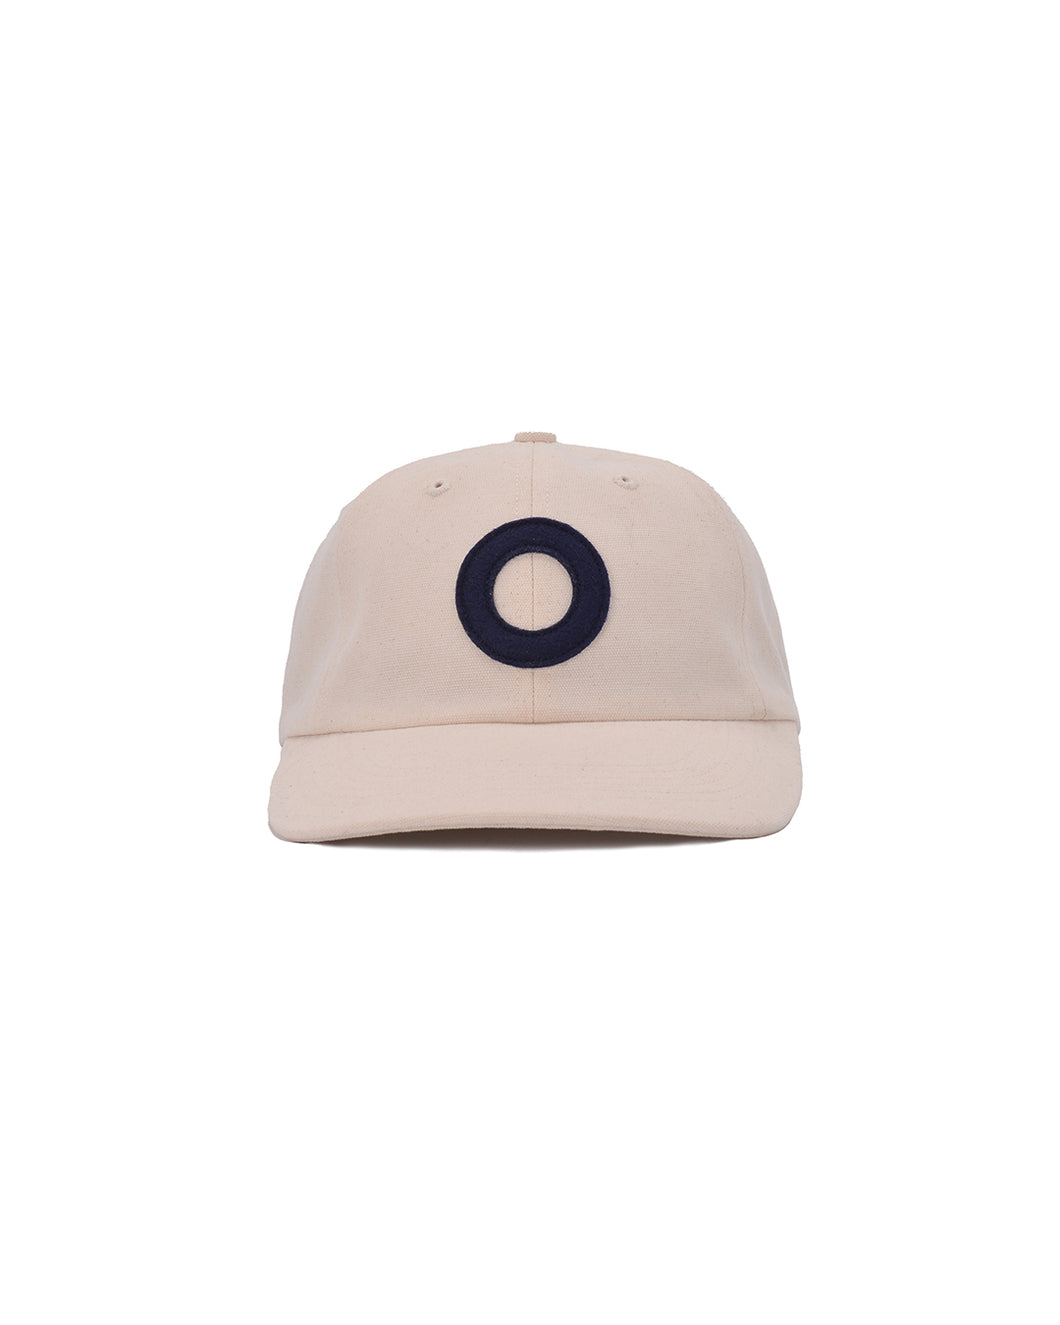 POP O SIX PANEL HAT - OFF WHITE/NAVY